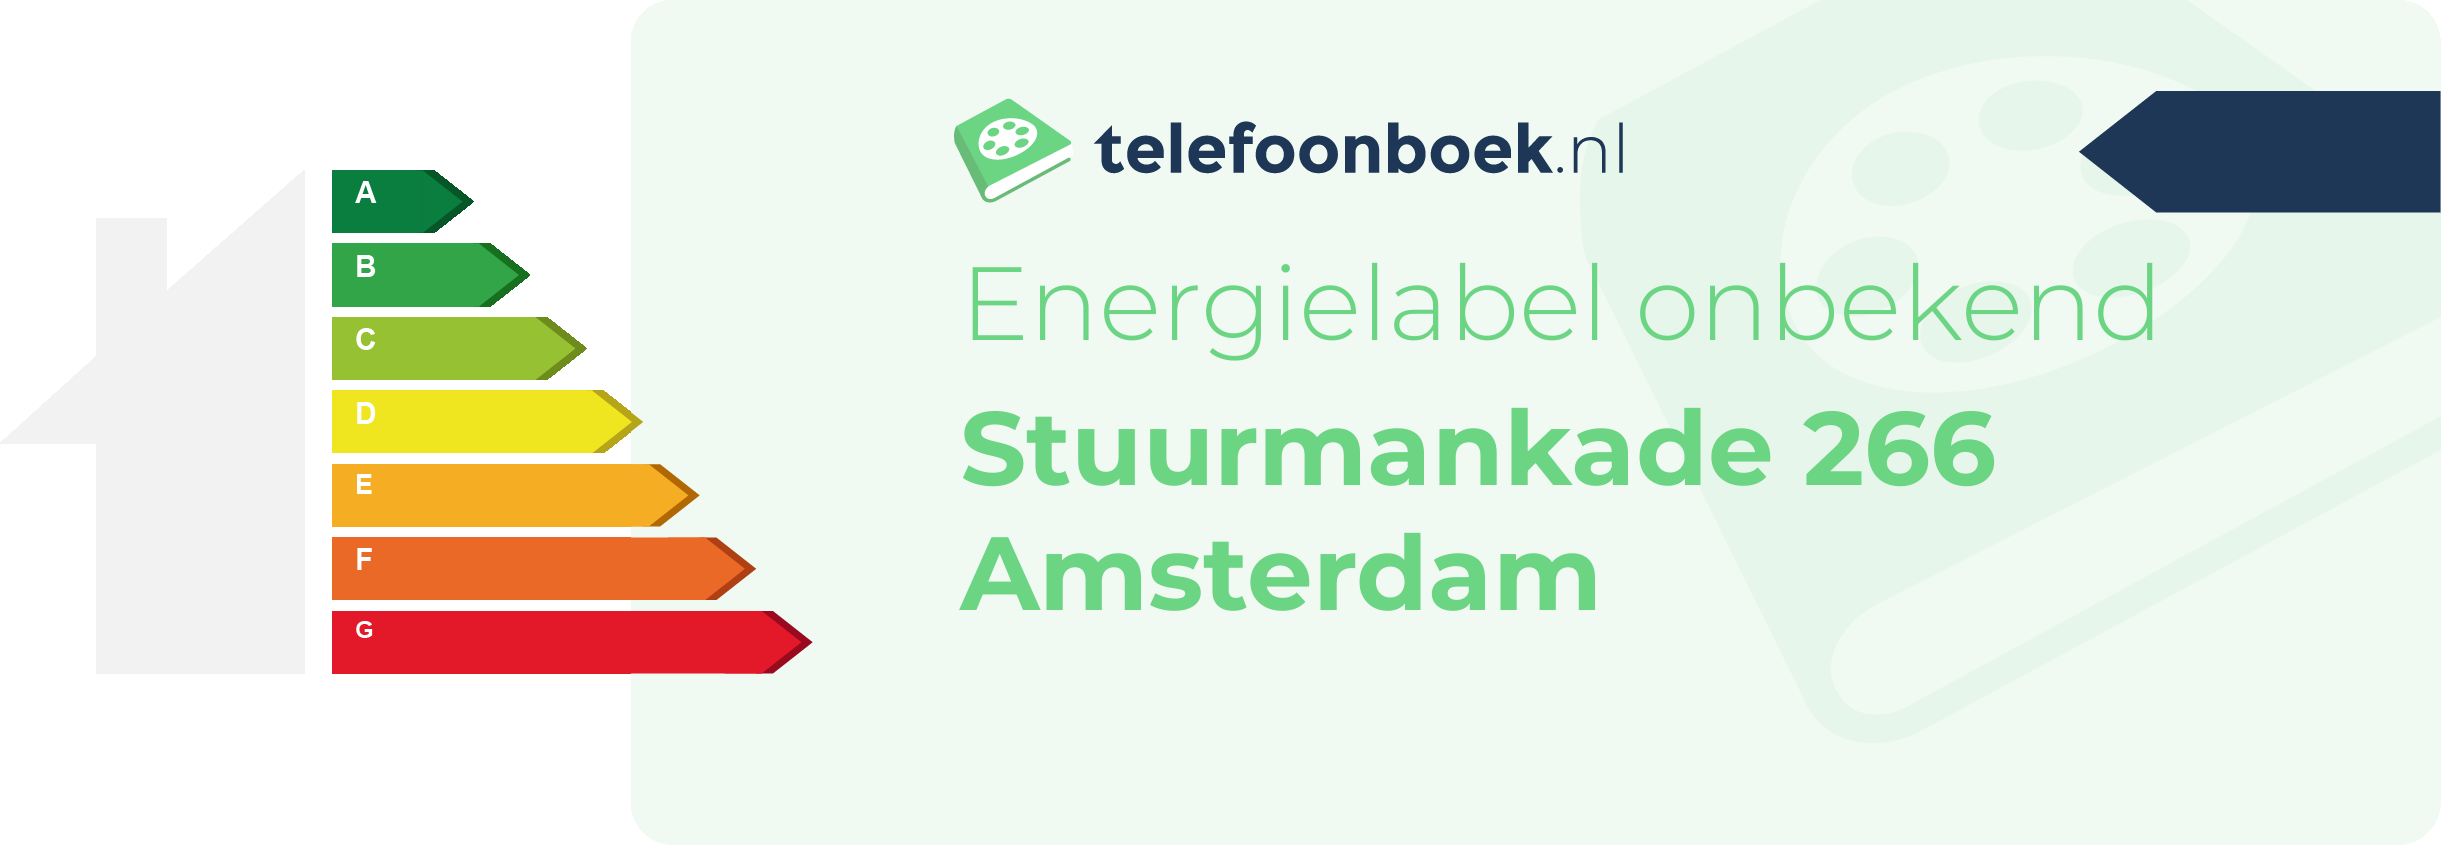 Energielabel Stuurmankade 266 Amsterdam